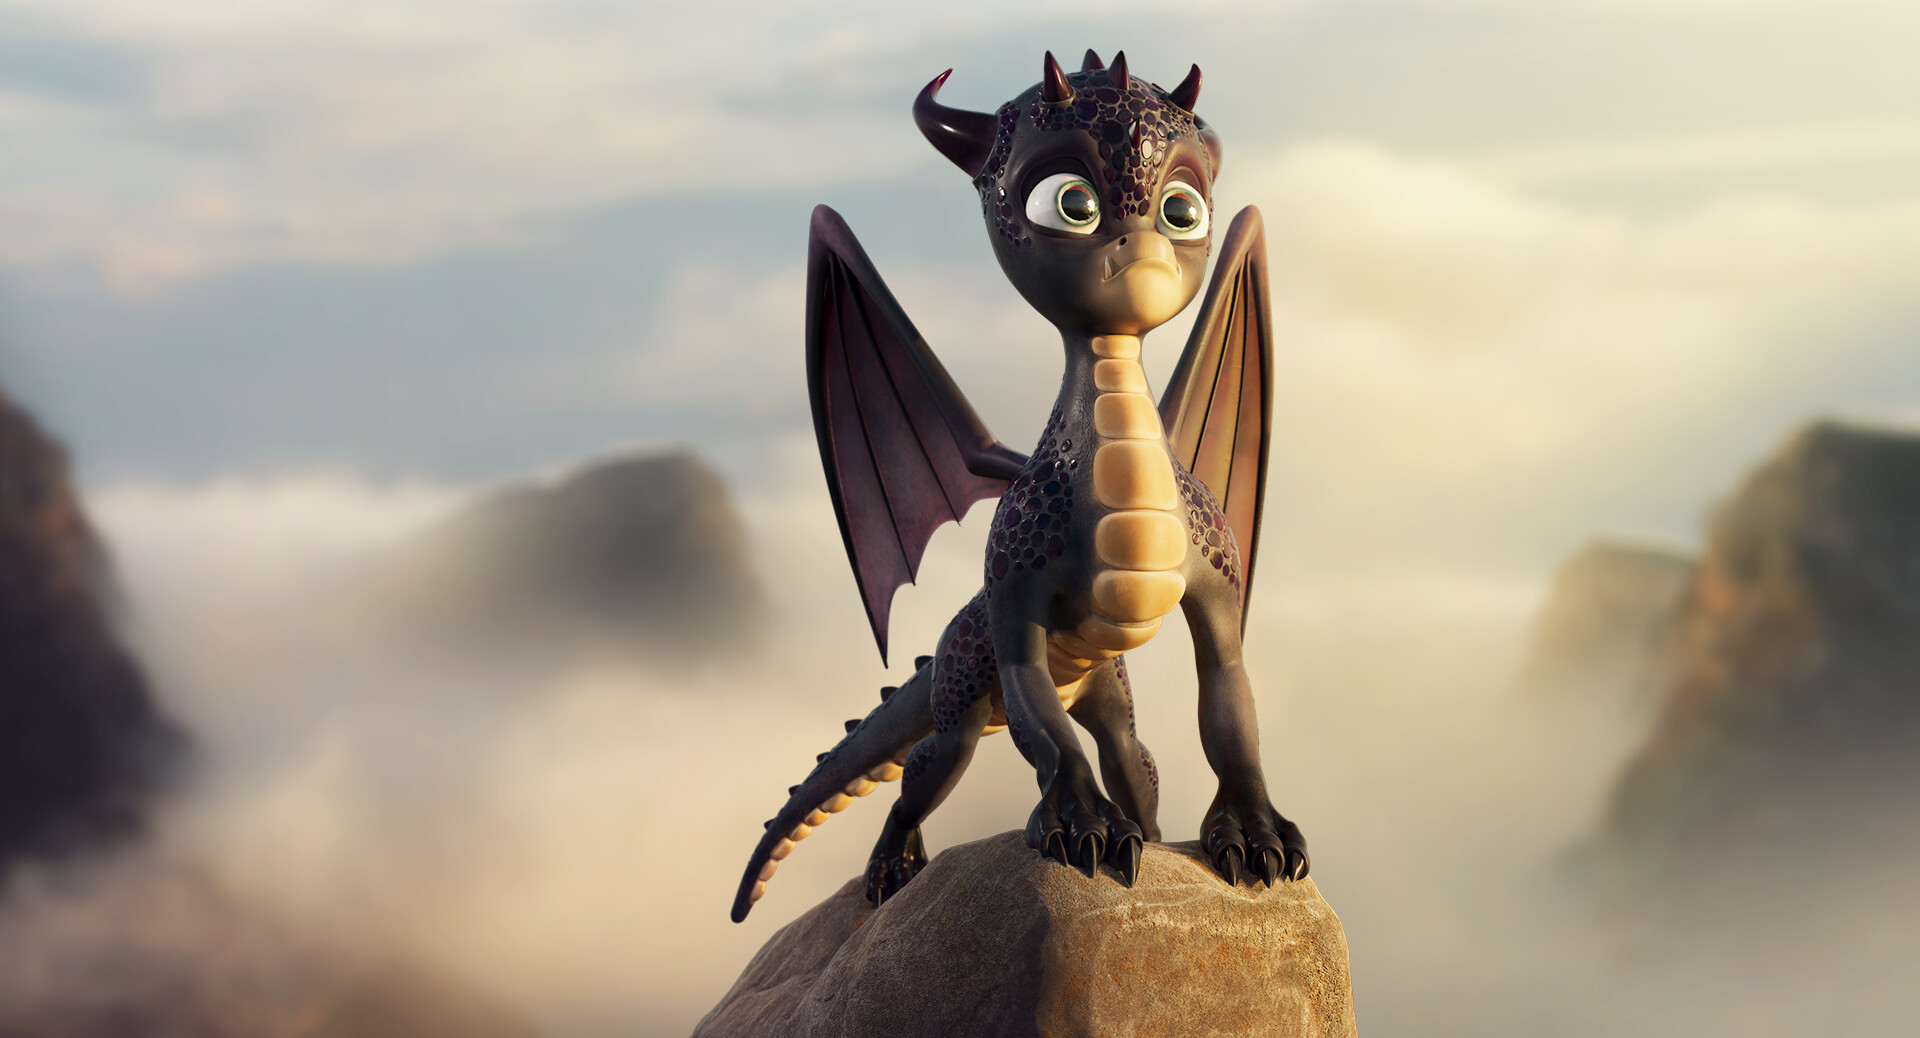 Young dragon cartoon image